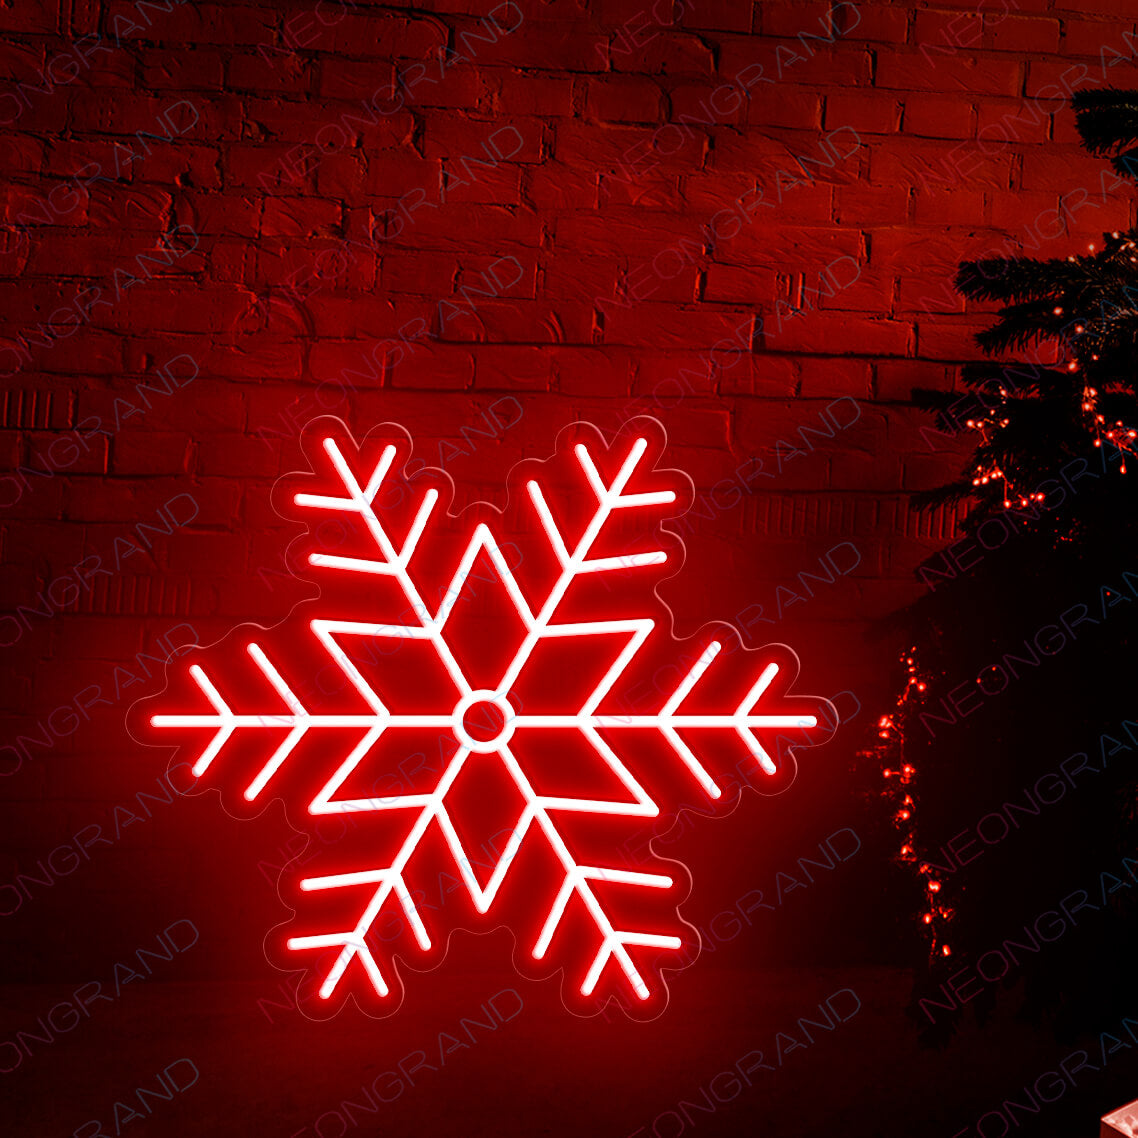 Christmas Neon Signs Snowflake Neon Sign Led Light red wm